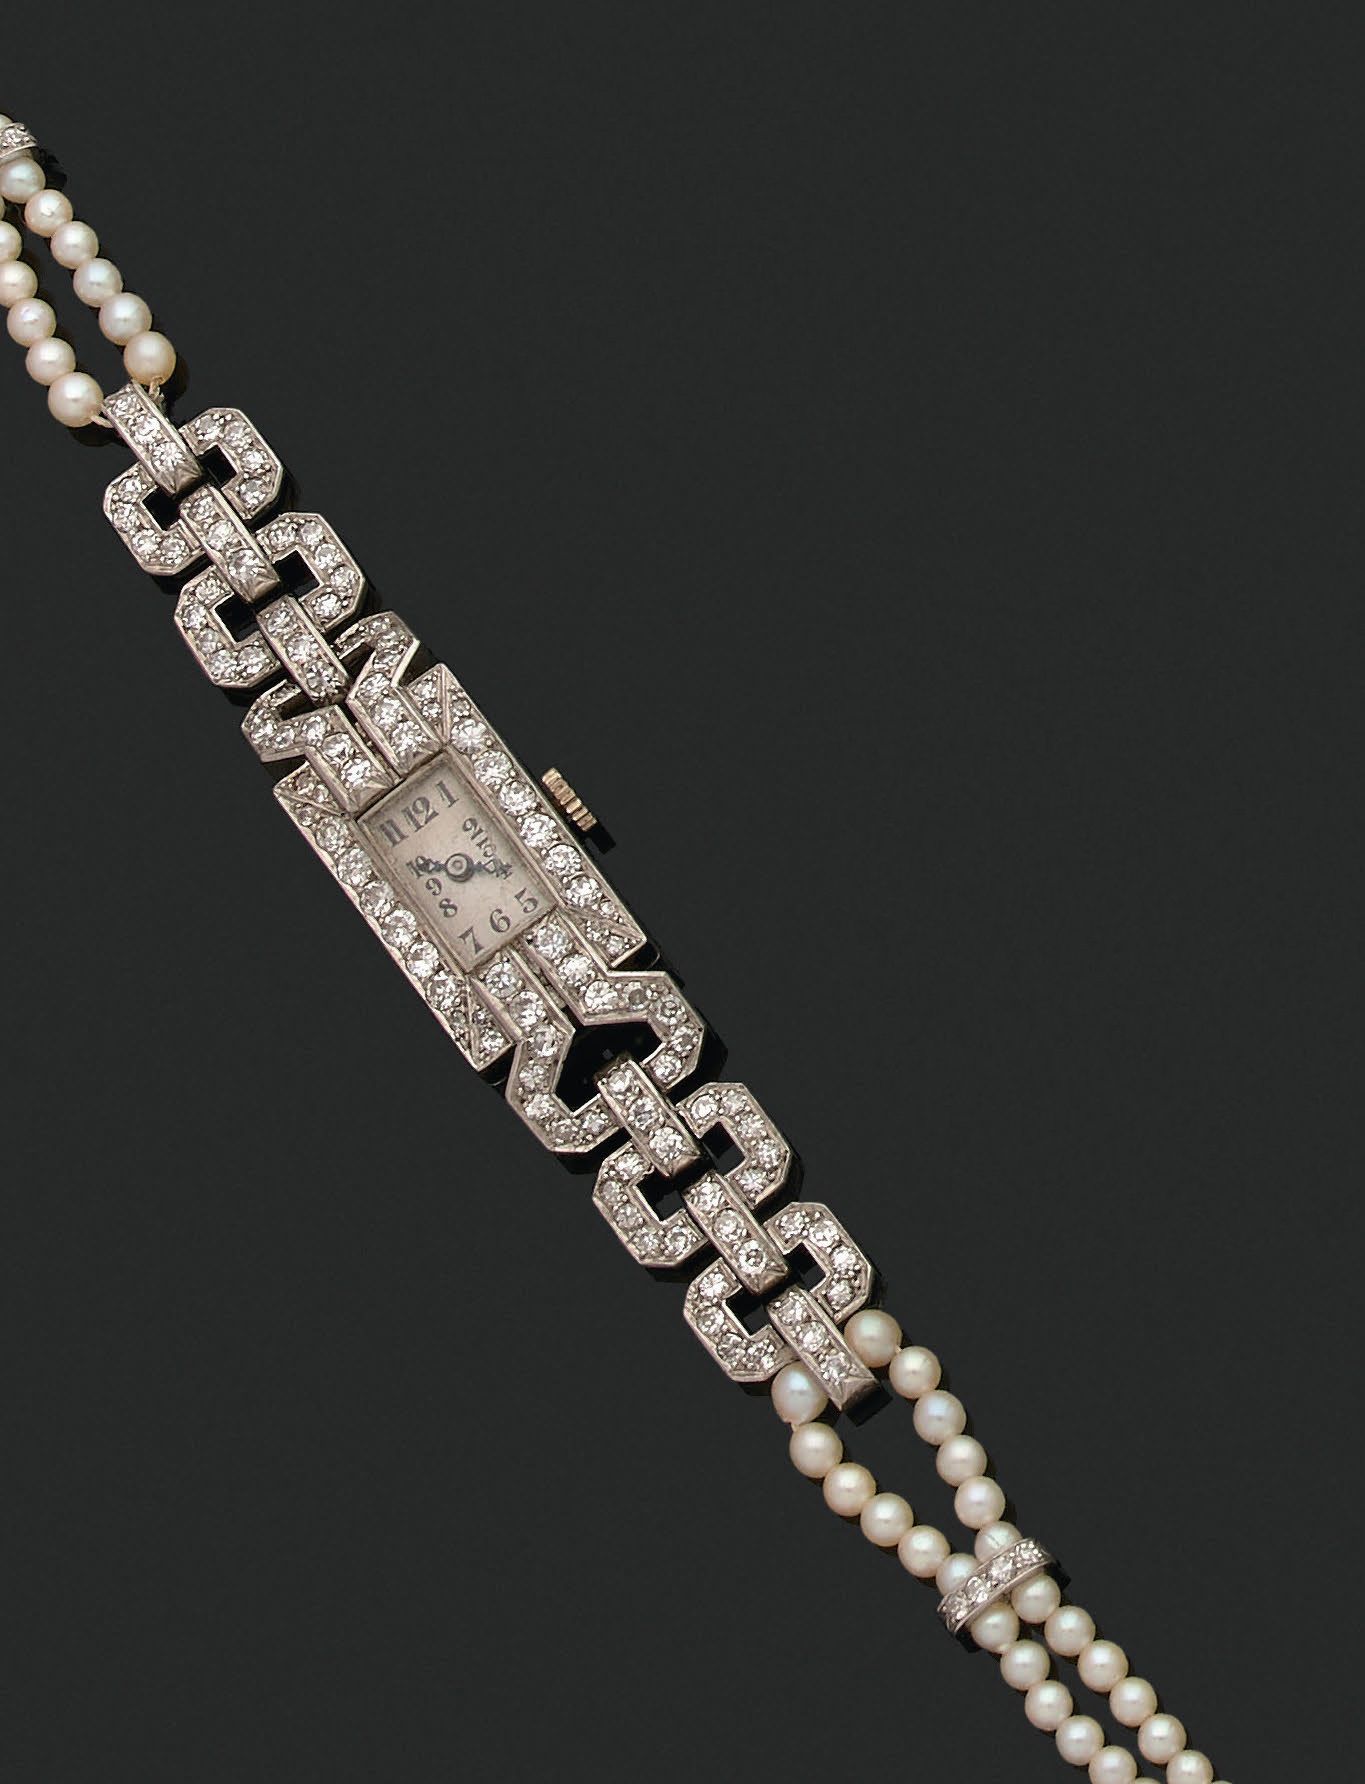 Null 女士手表 "珠宝
养殖珍珠，老式切割钻石
铂金（950），18K金（750）。
Pb.26.3克

养殖珍珠、钻石、铂金和黄金腕表